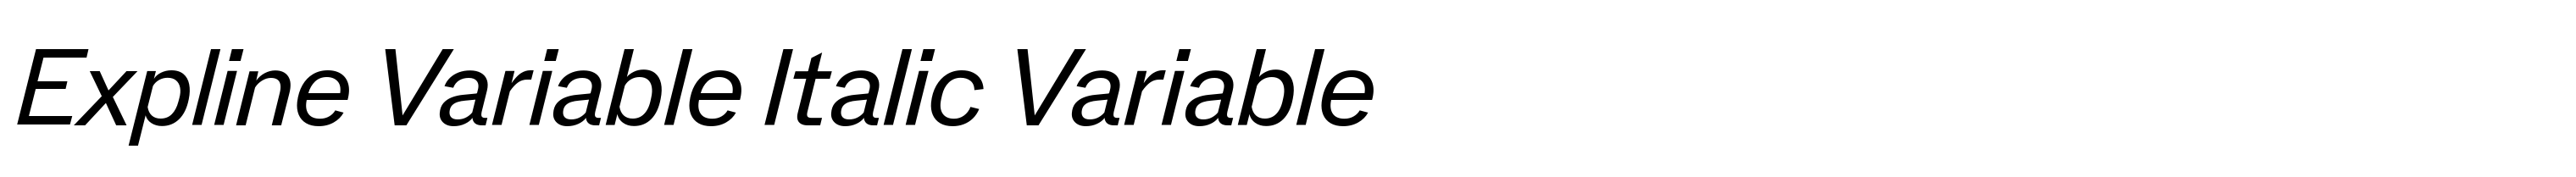 Expline Variable Italic Variable